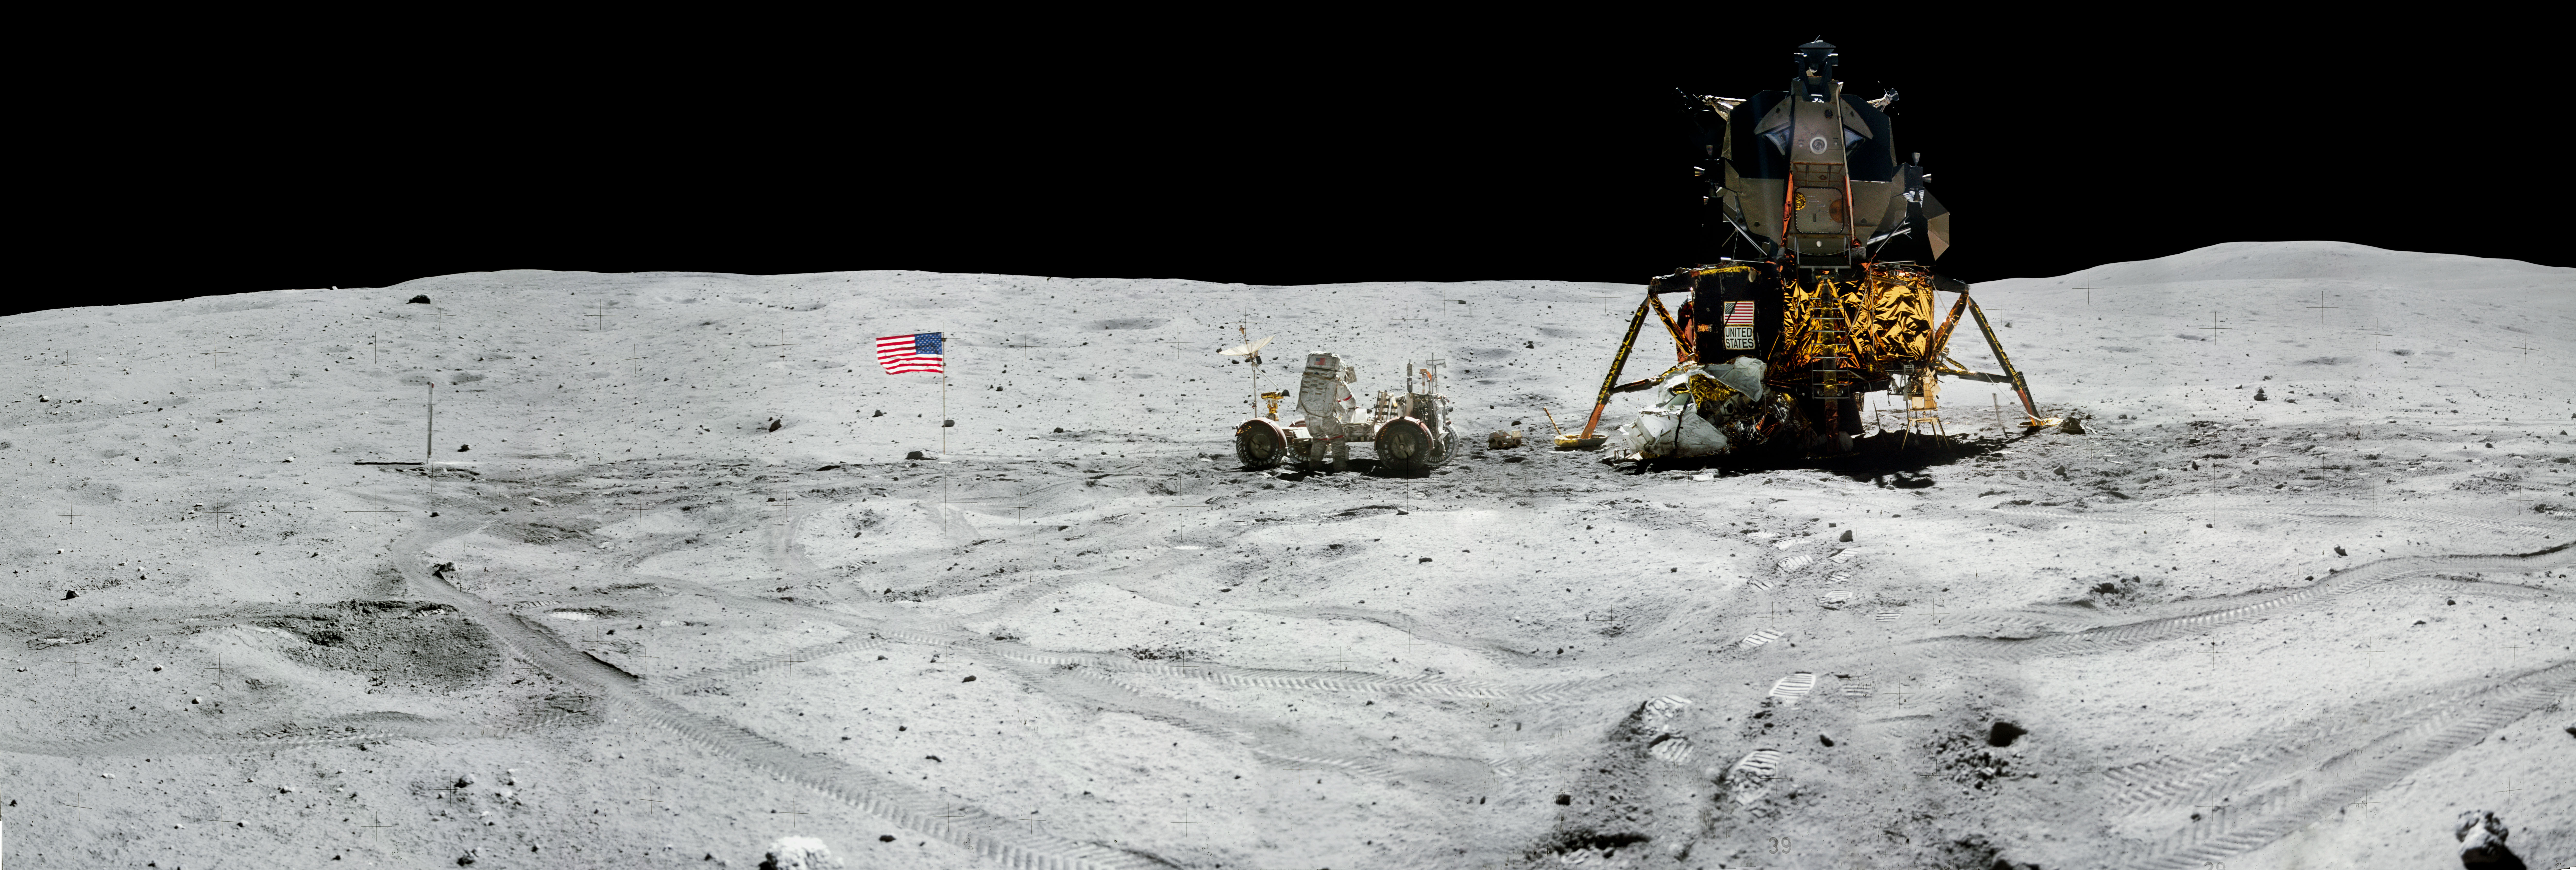 Высадка аполлона. Миссия Аполлон 11. Аполлон-11 фото. Аполлон 16 на Луне 1972. Апполо 11 на Луне.